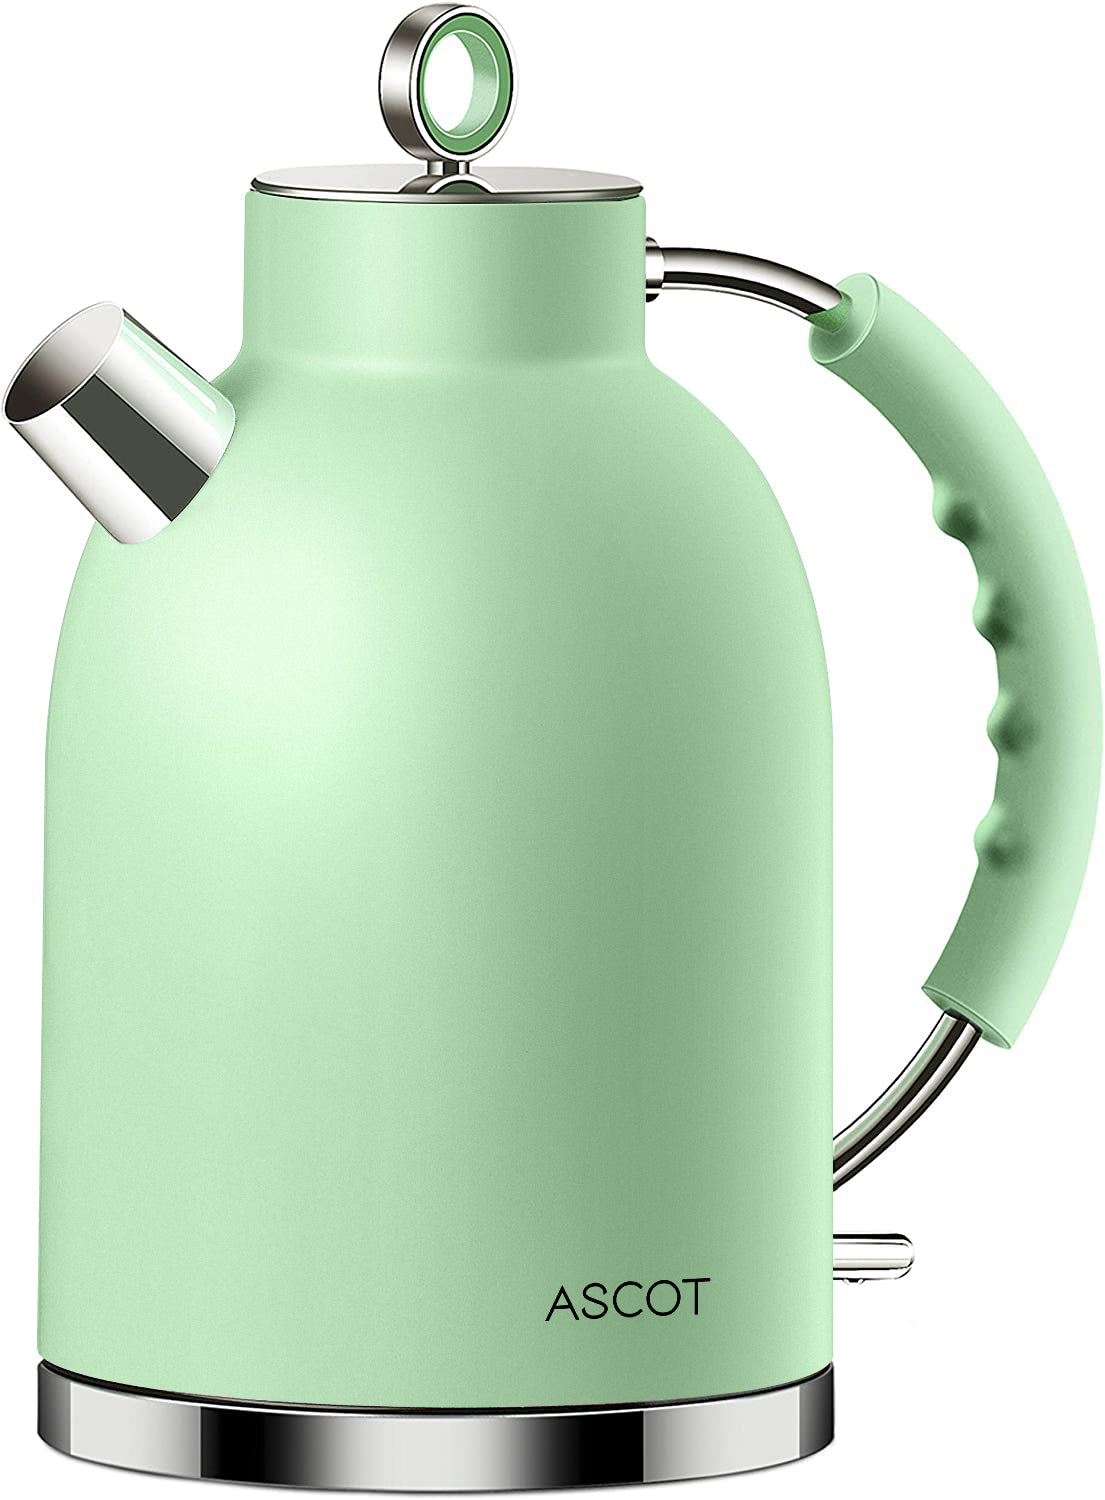 ASCOT Electric Kettle Stainless Steel Tea Kettle,1.6L(K1-Matte Green)